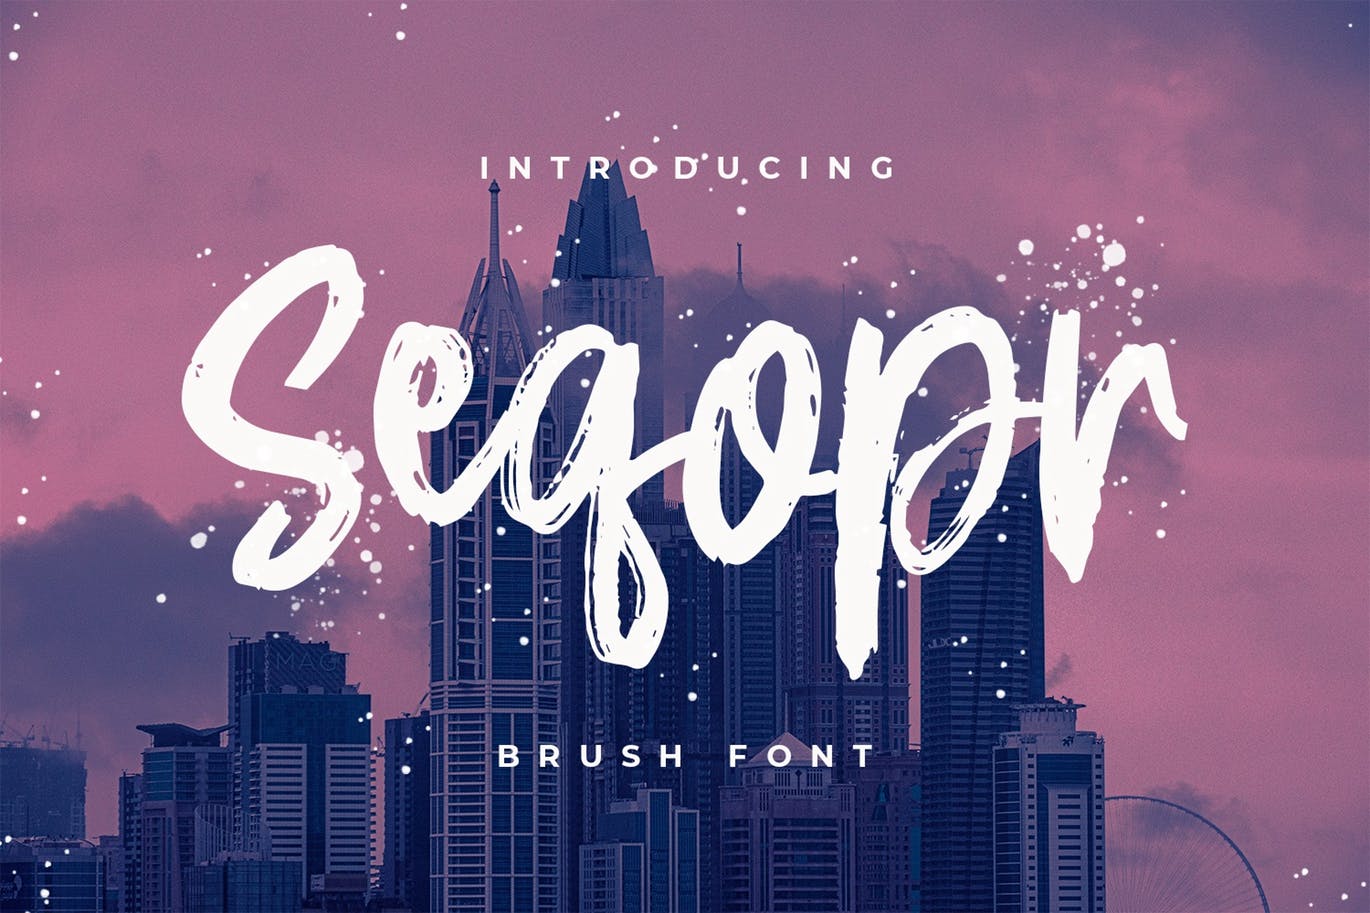 Logo/印刷设计英文笔刷字体16设计素材网精选 Seqopr – The Brush Font插图